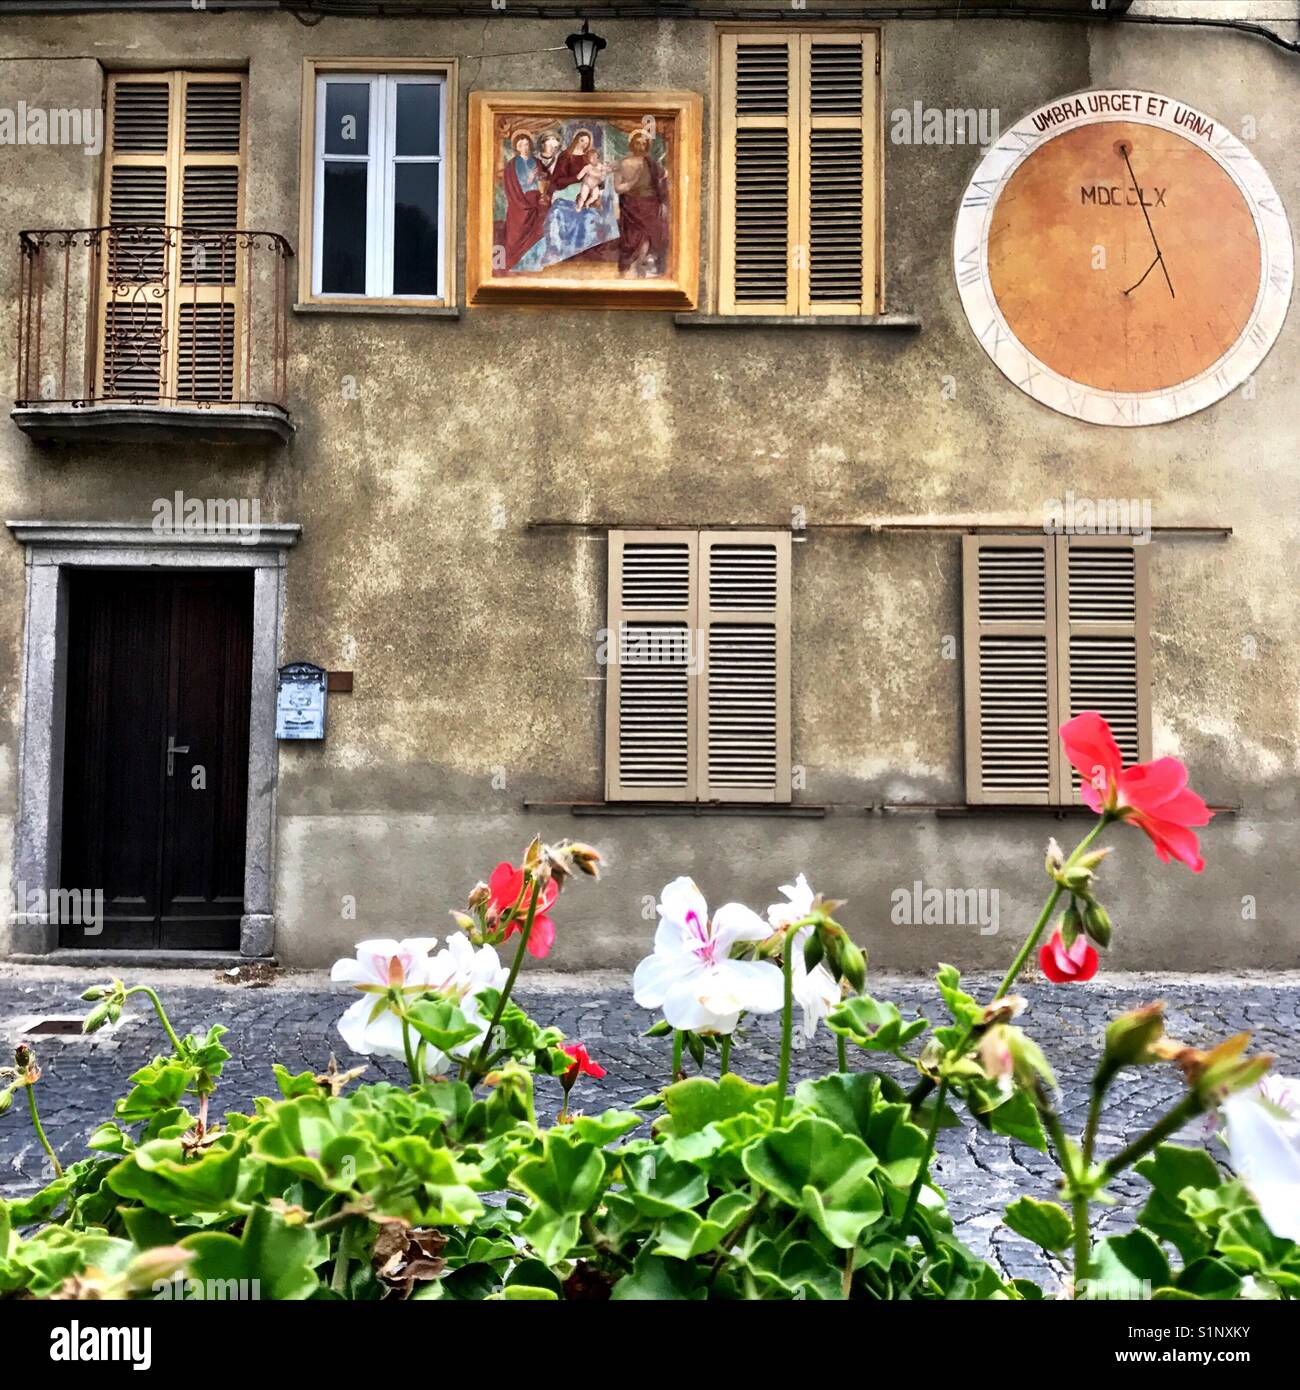 Doors and windows art architecture flowers Campiglia Cervo Biella Piemonte Italy Stock Photo